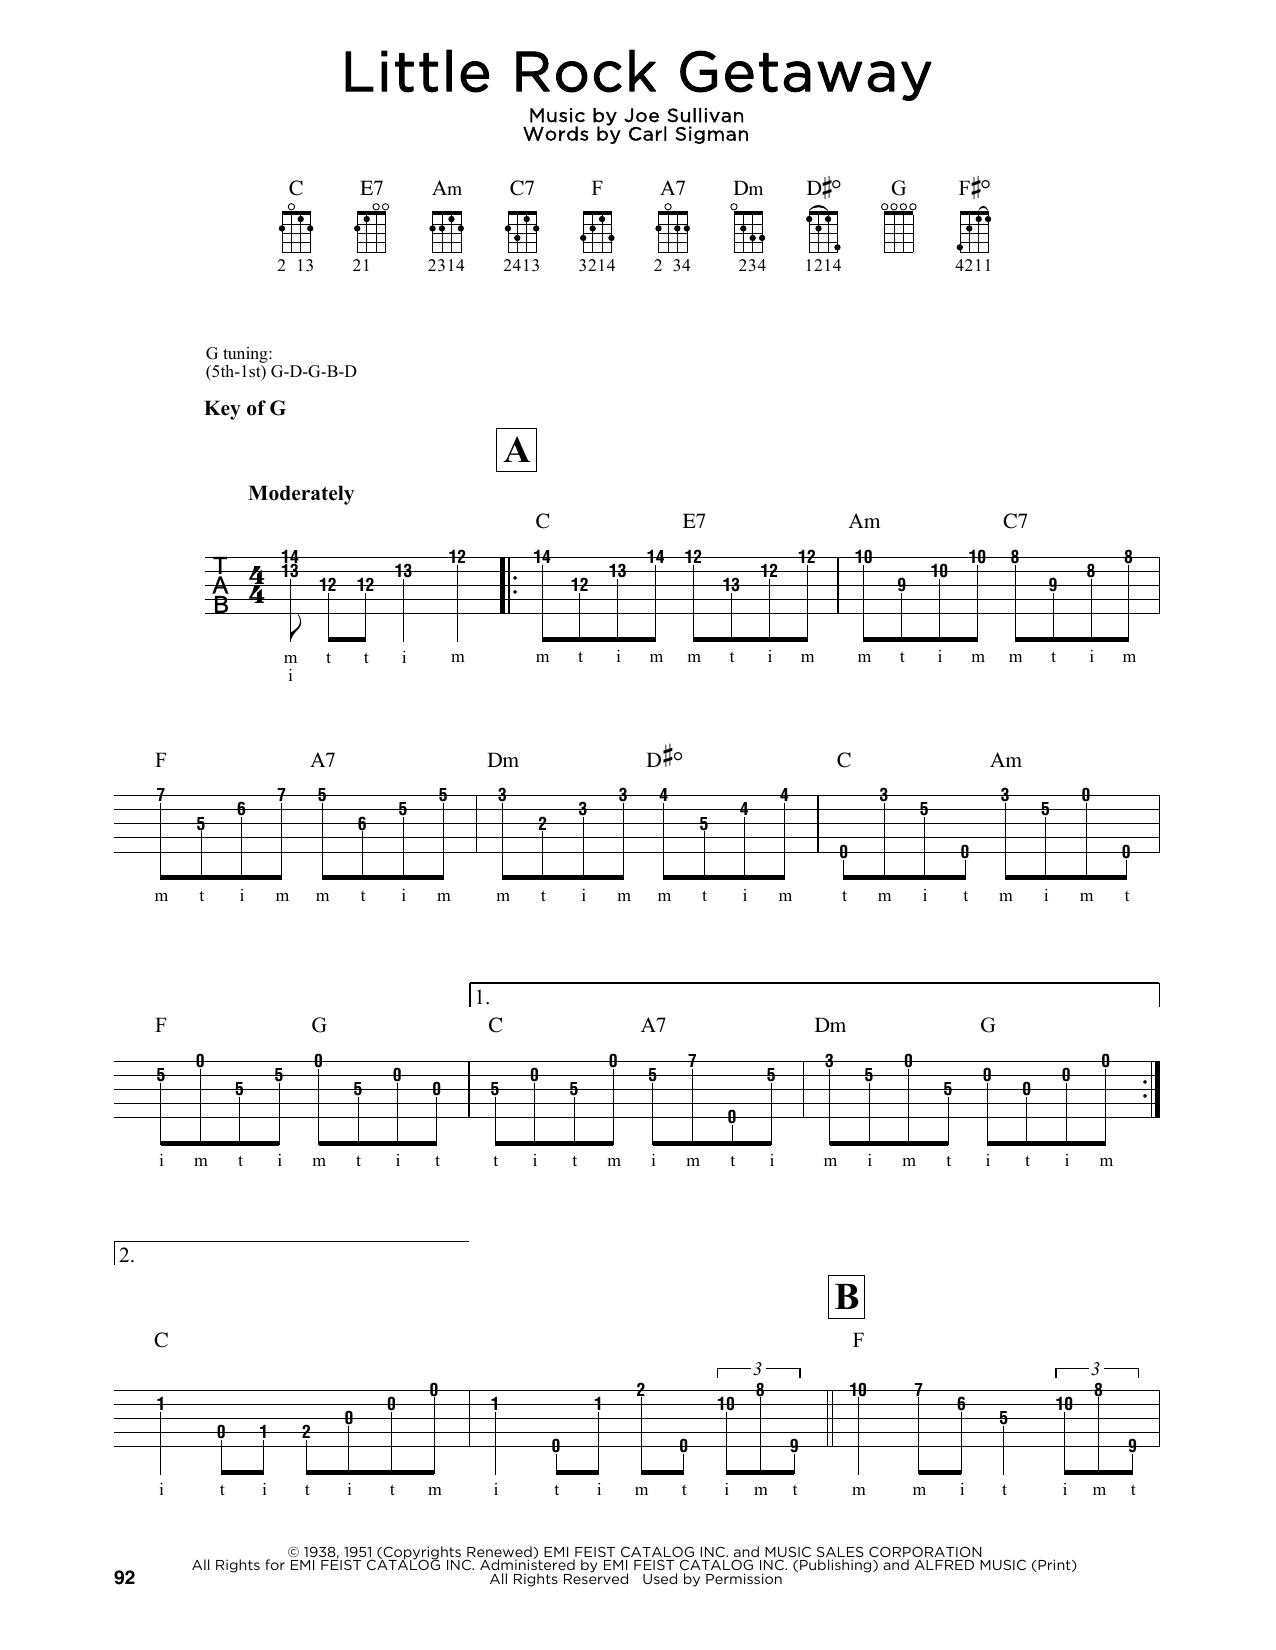 Download Joe Sullivan Little Rock Getaway Sheet Music and learn how to play Banjo PDF digital score in minutes